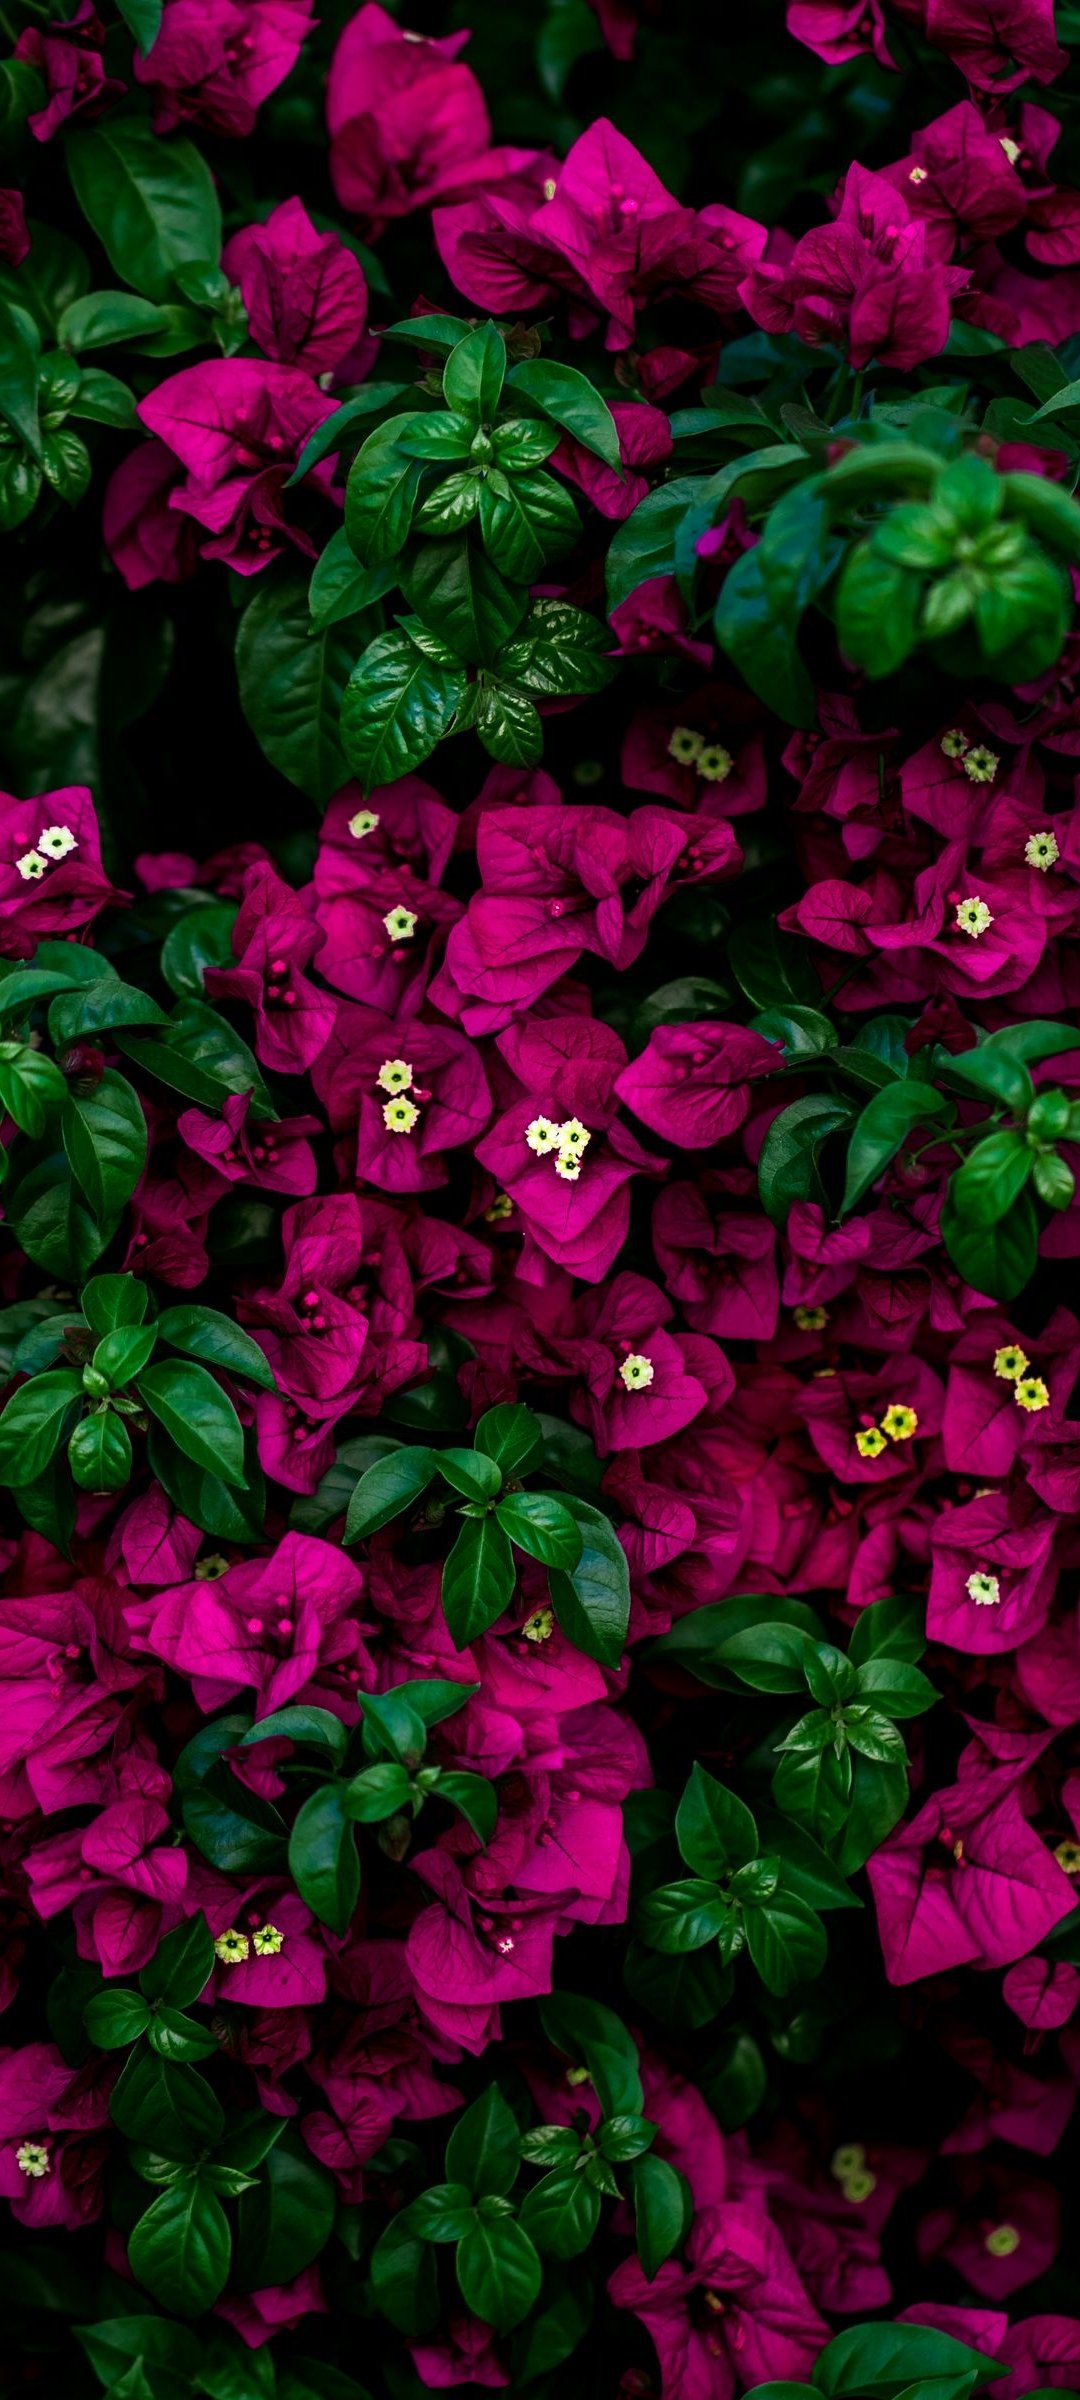 750 Dark Flower Pictures  Download Free Images on Unsplash